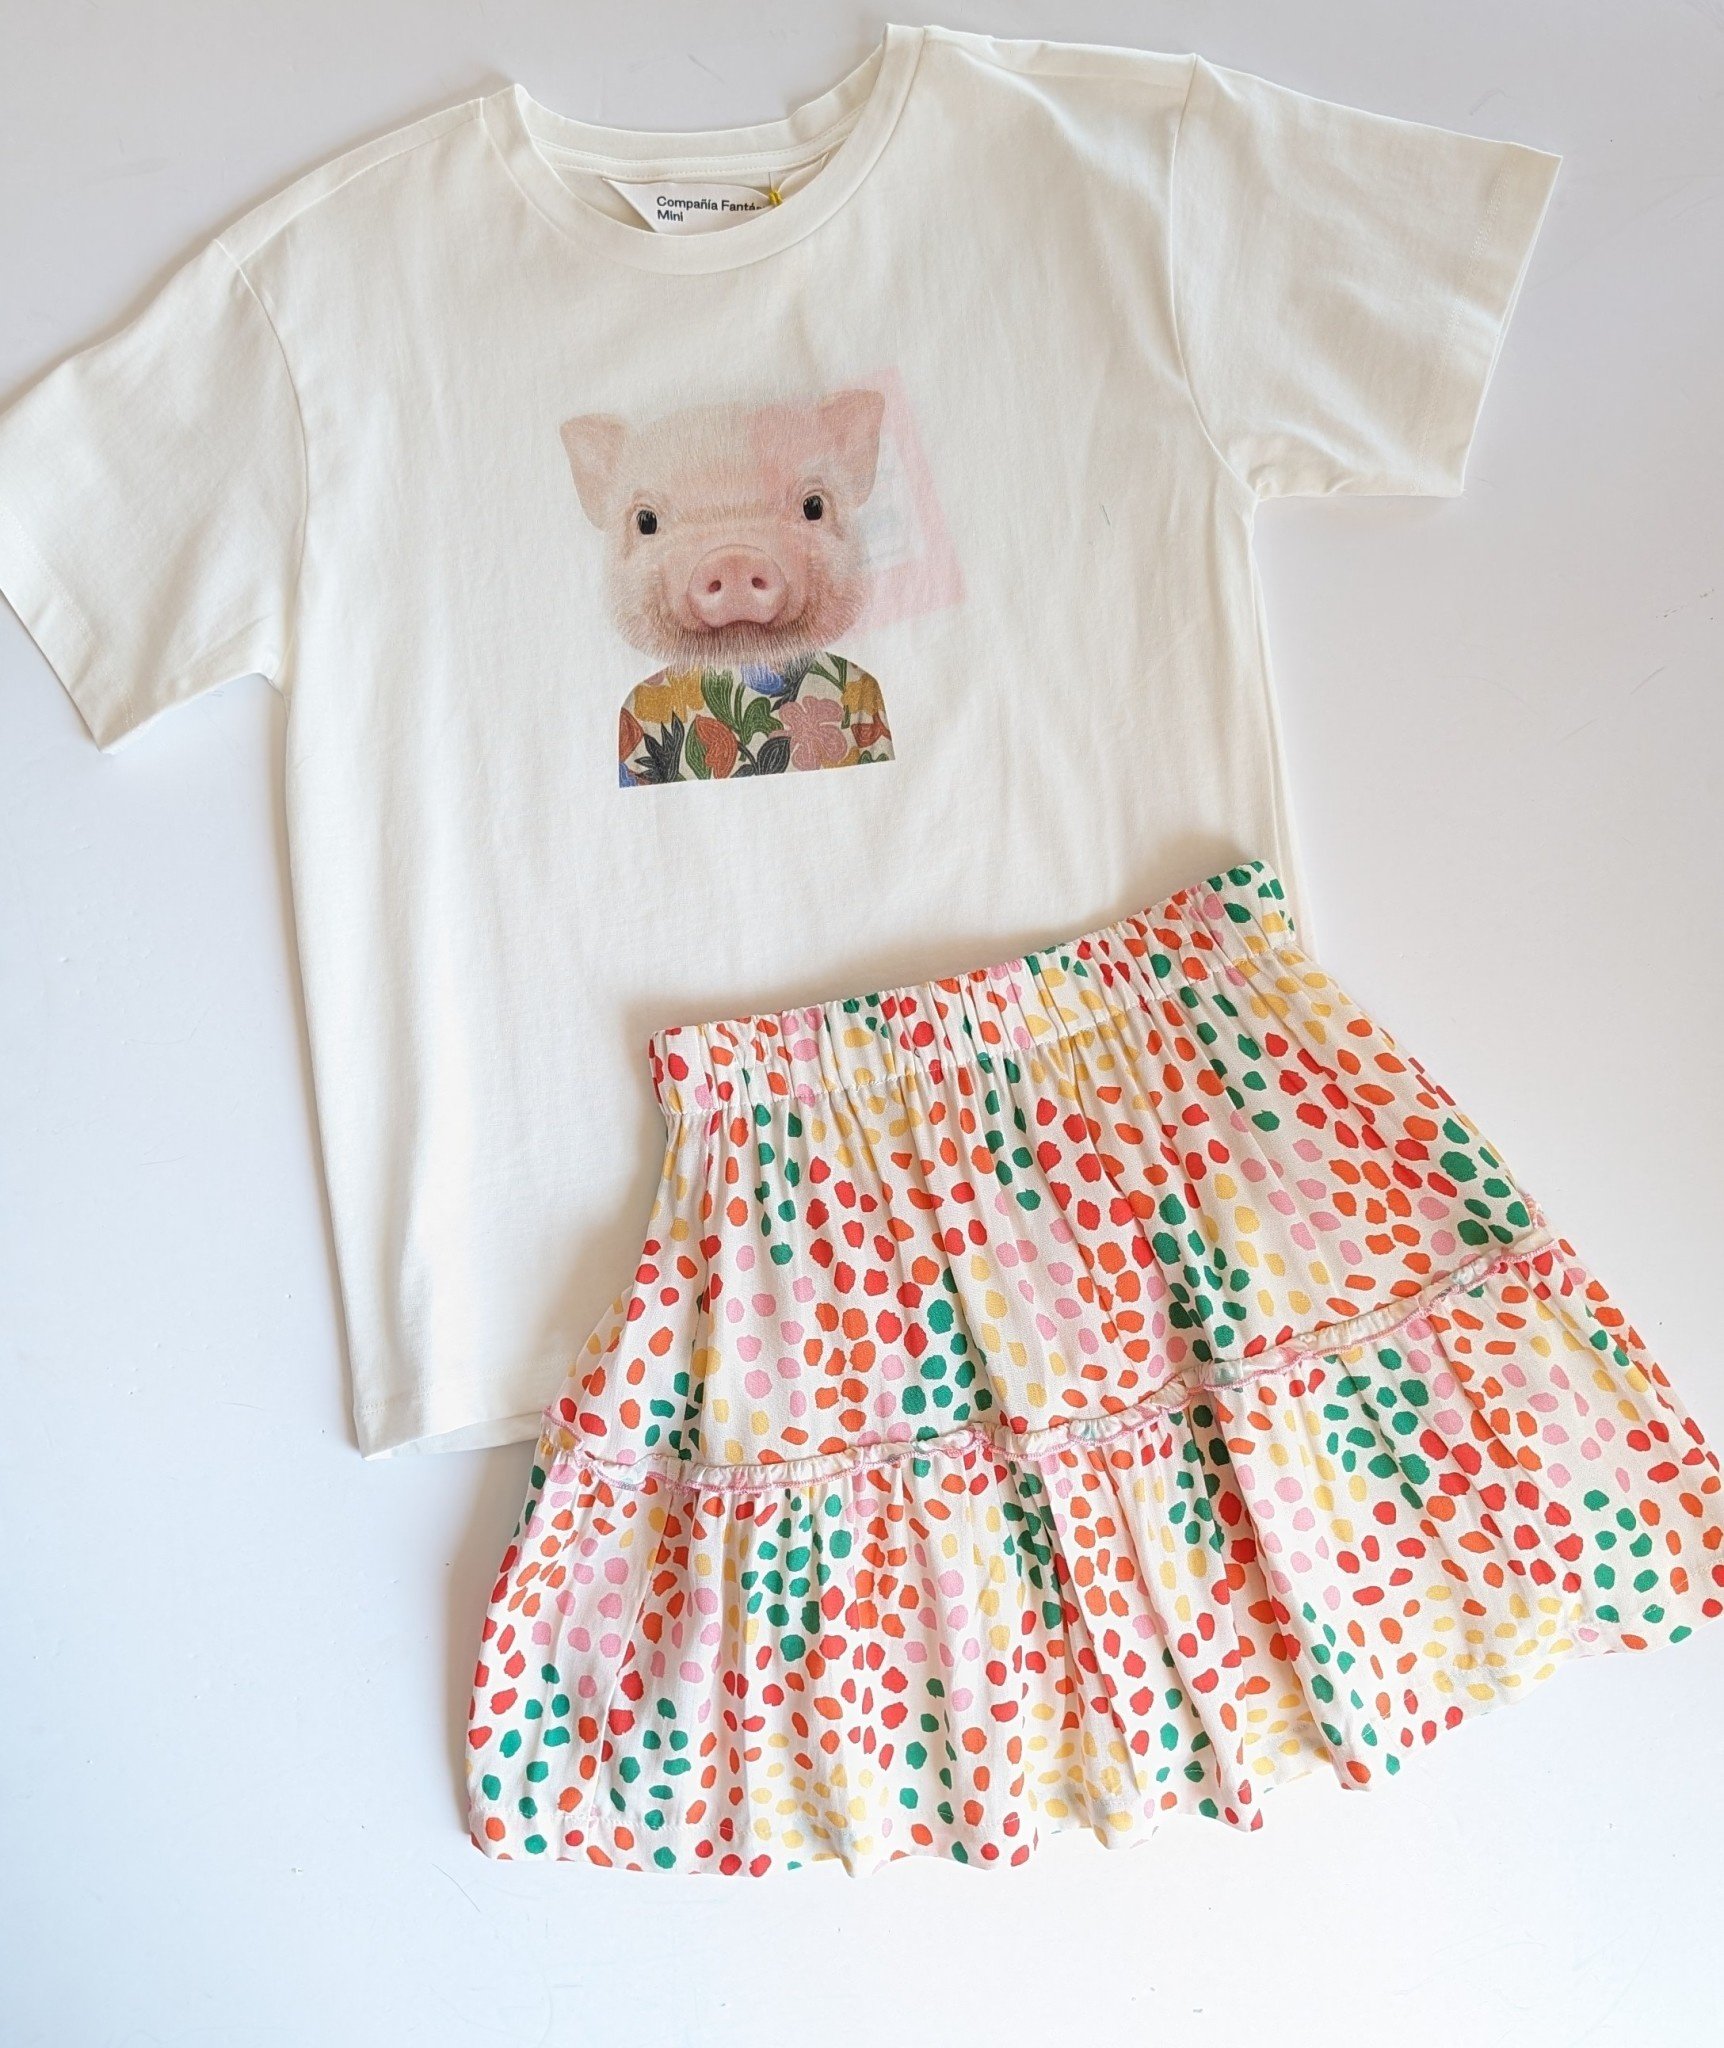 Compania Fantastica Multi Color Dot Skirt